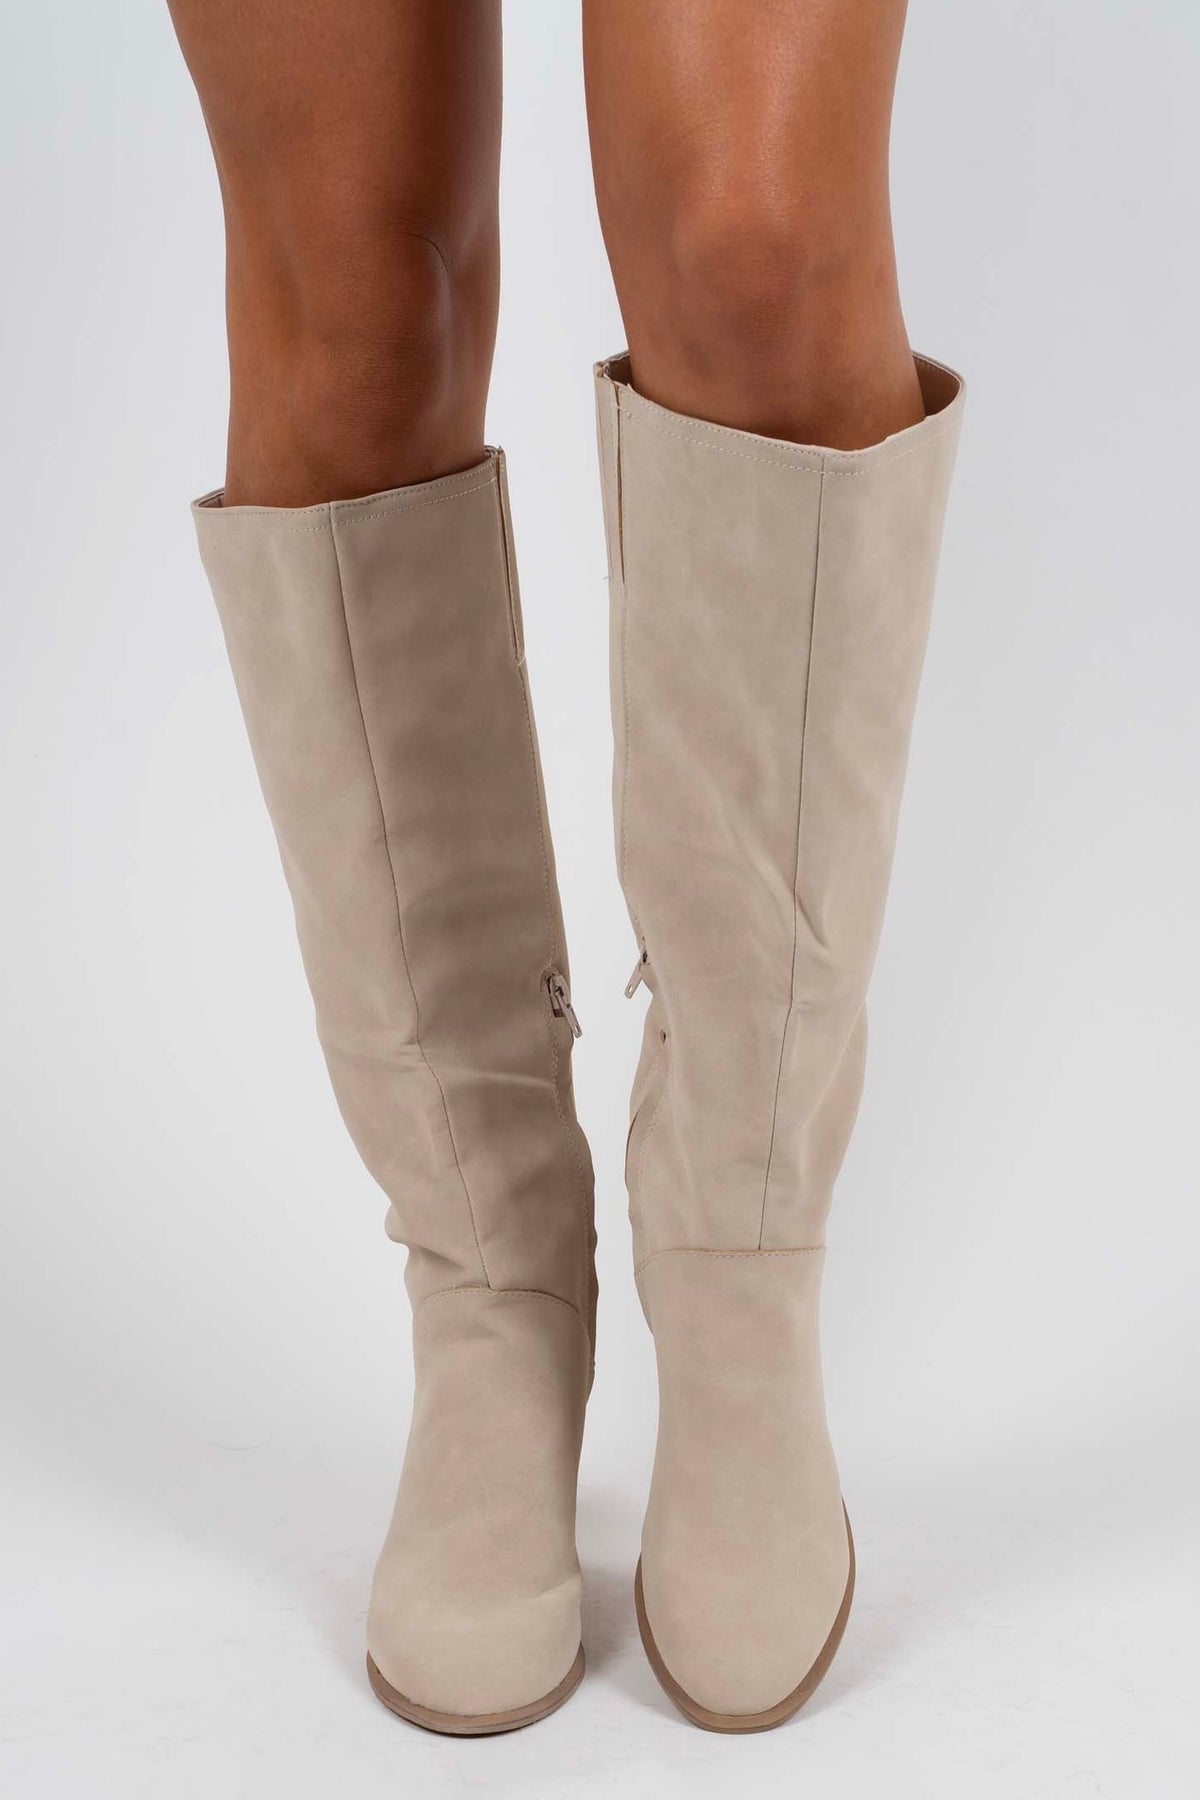 Shiloh Boots (Light Grey)